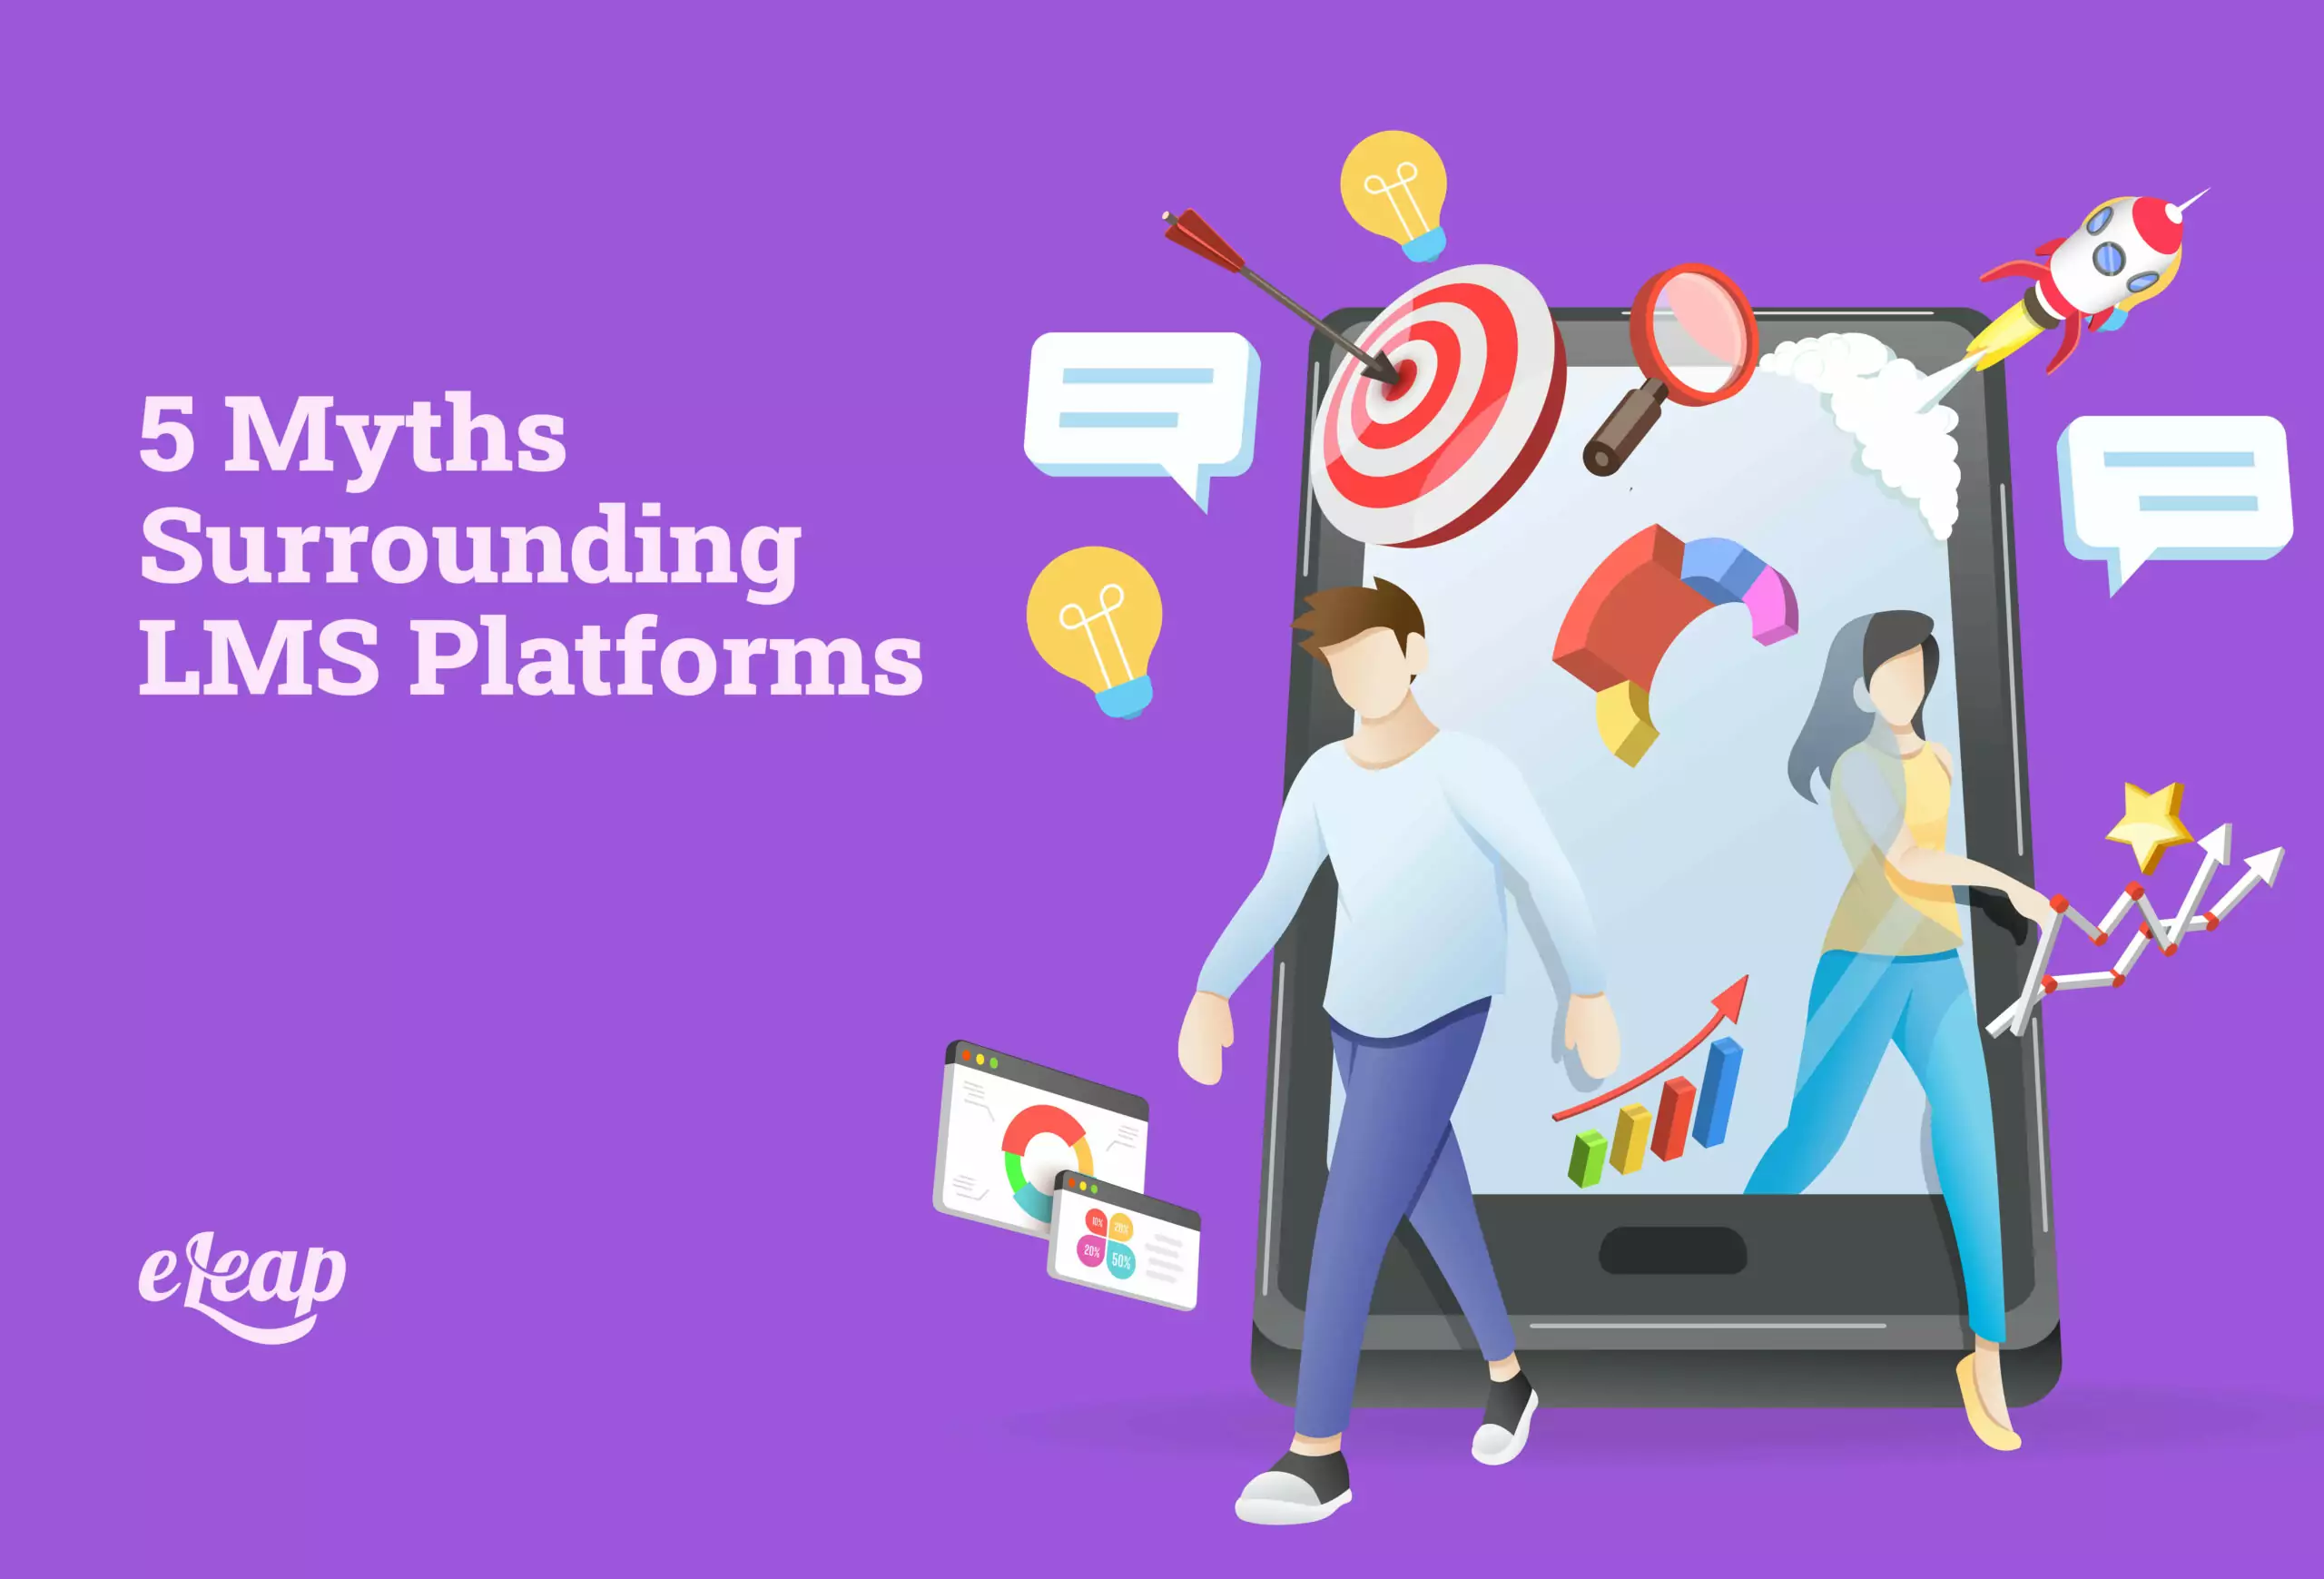 5 Myths Surrounding LMS Platforms